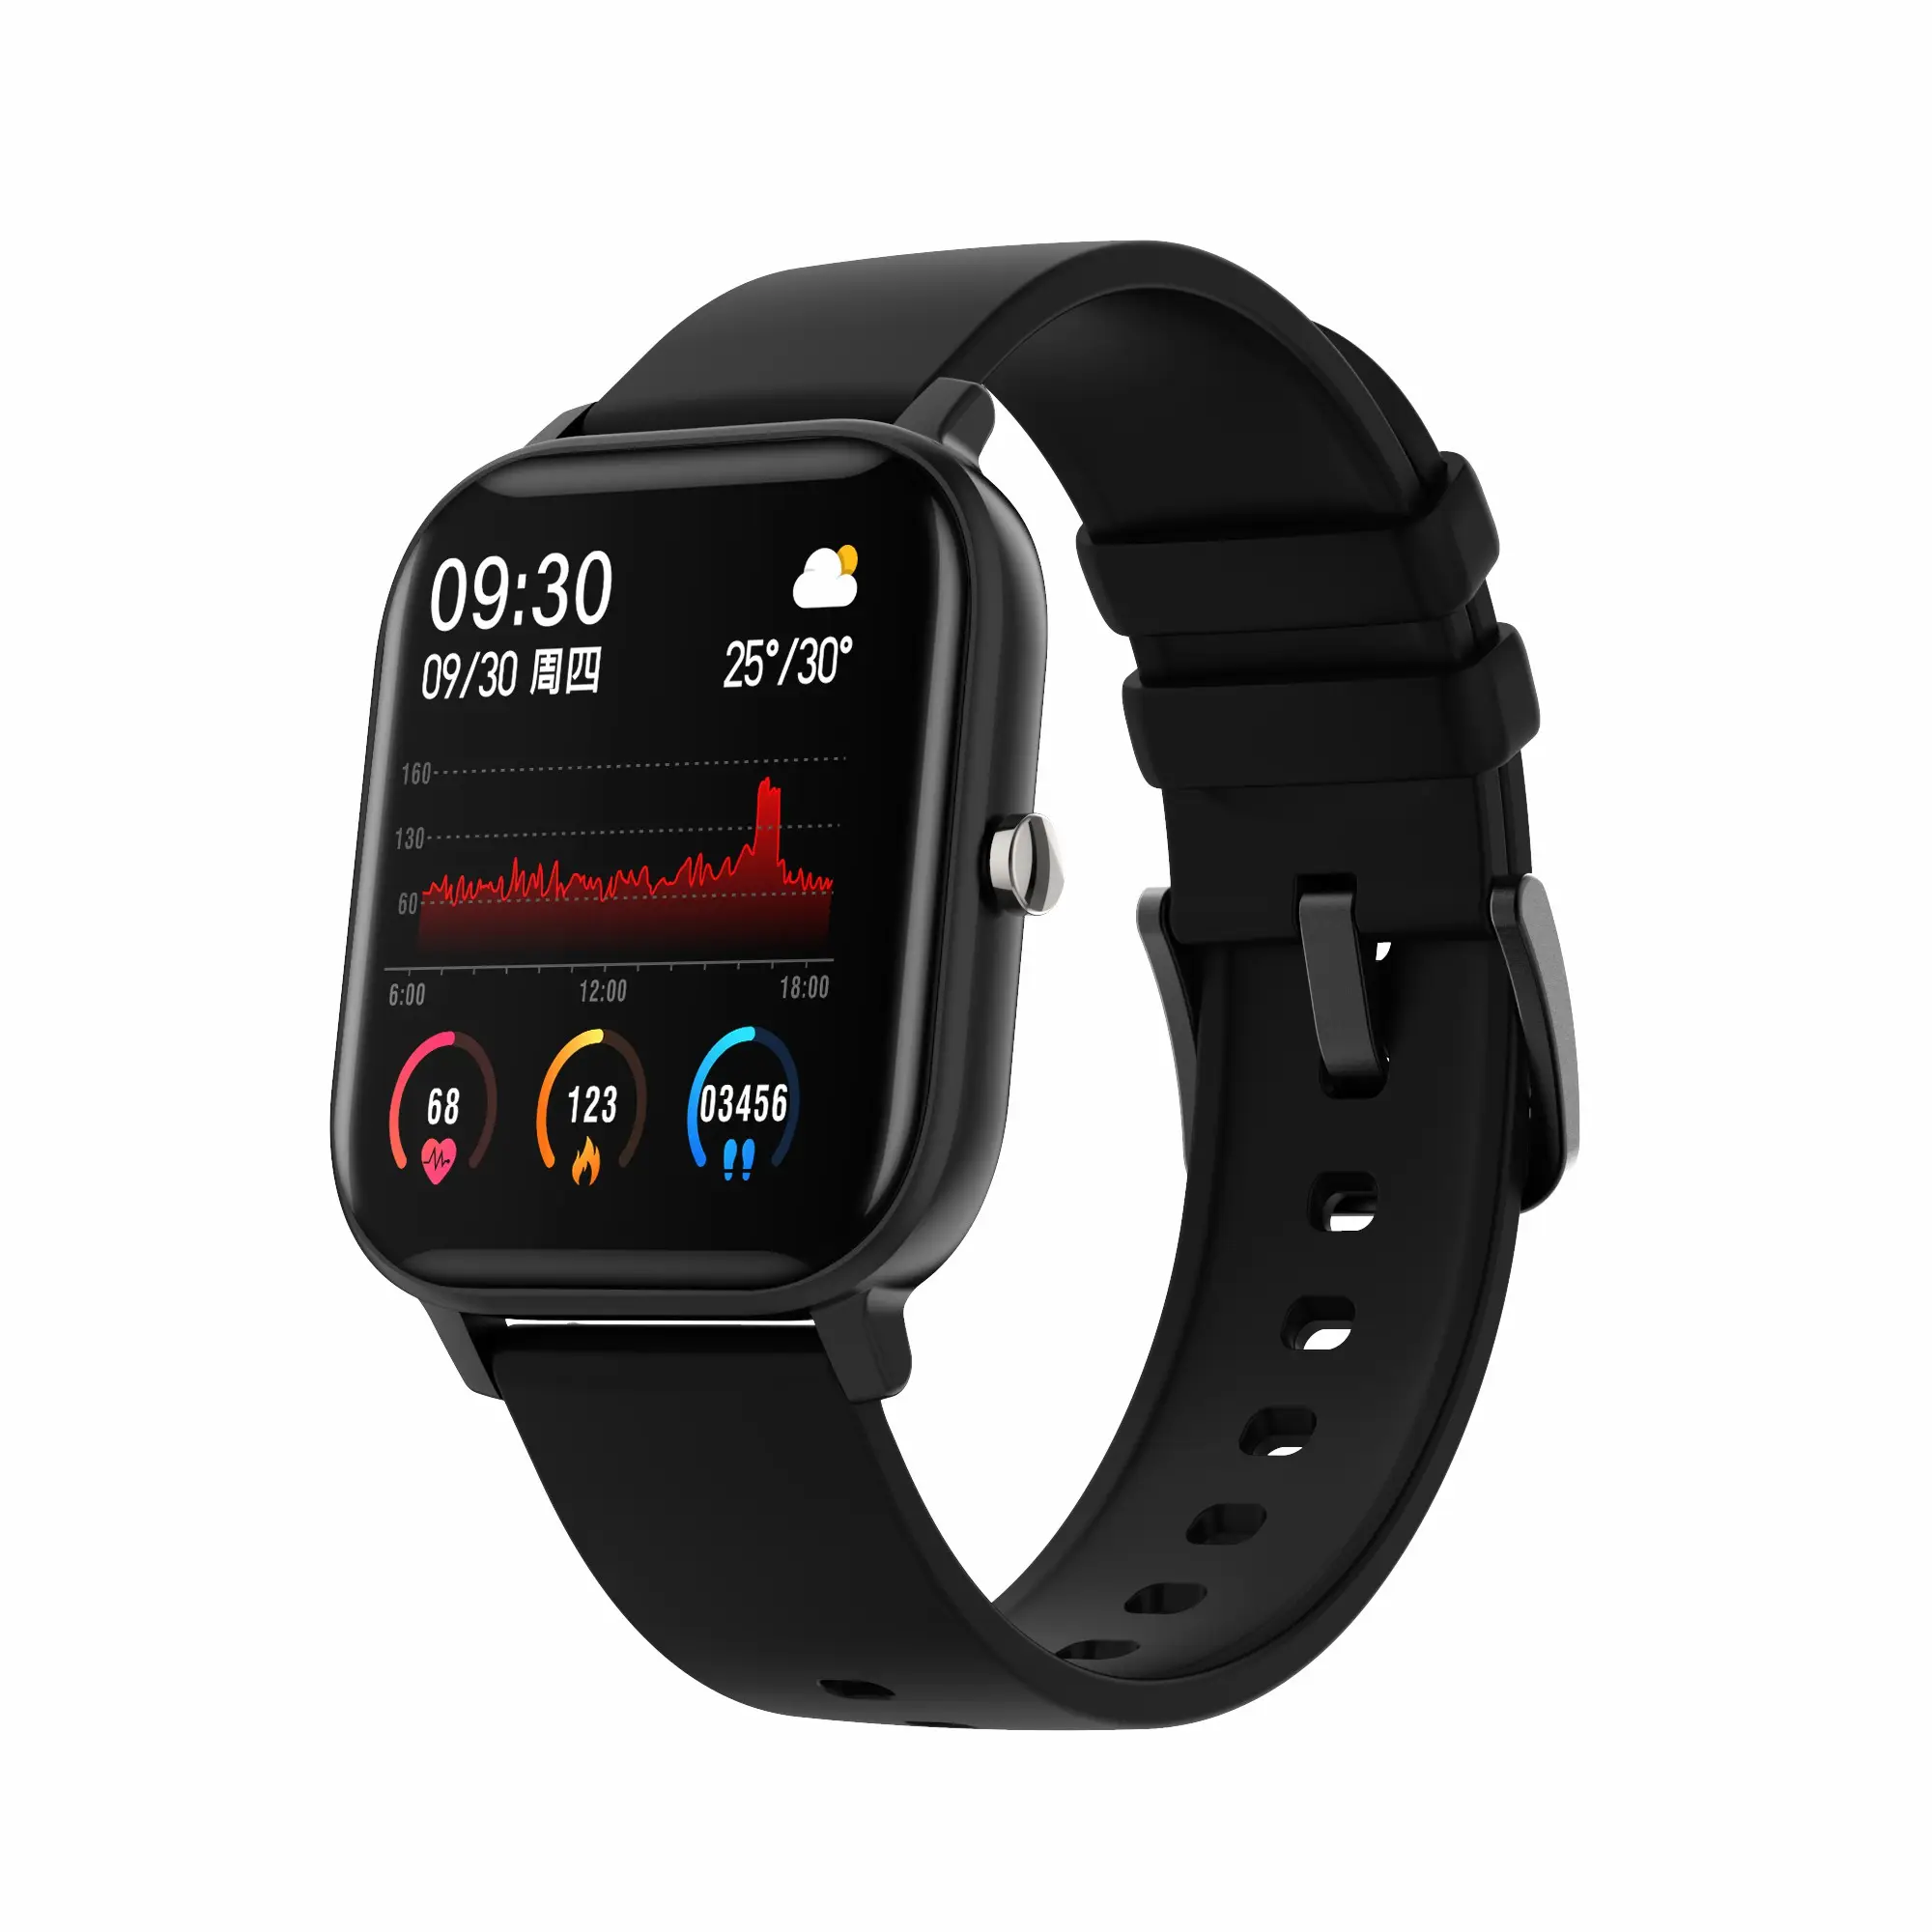 Best Price P8 Smartwatch 1.4 inch Full Touch Screen IP67 Waterproof Fitness Tracker Sleep Tracker P8 Smart Watch